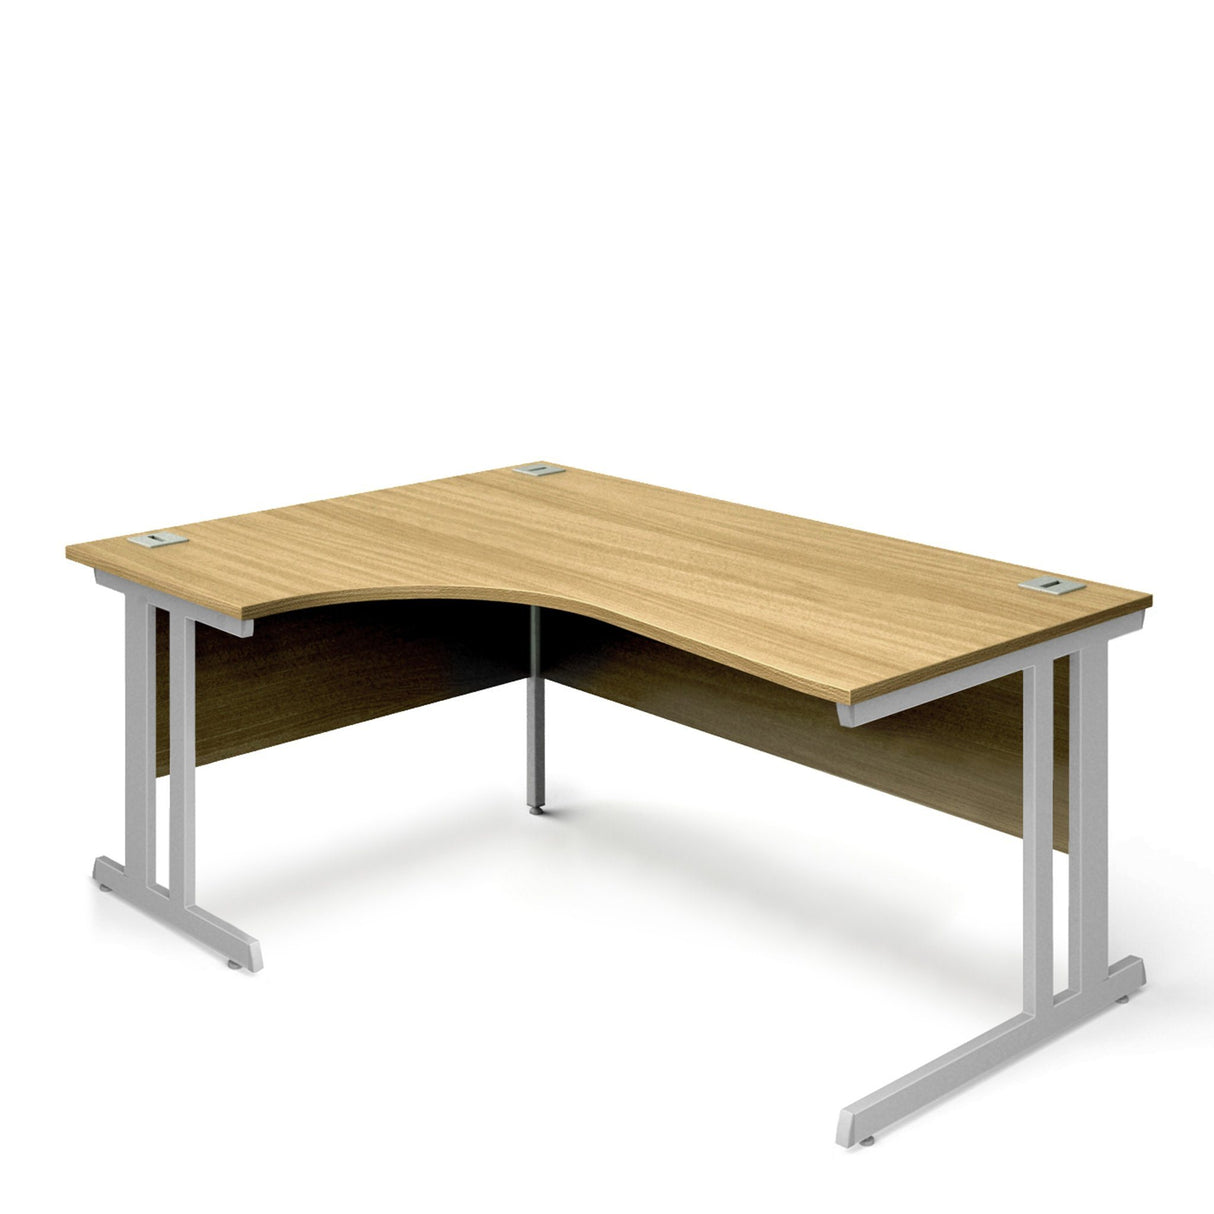 Nautilus Designs Aspire - Ergonomic Left Hand Corner Desk - 1600mm Wide with Cable Management & Modesty Panels